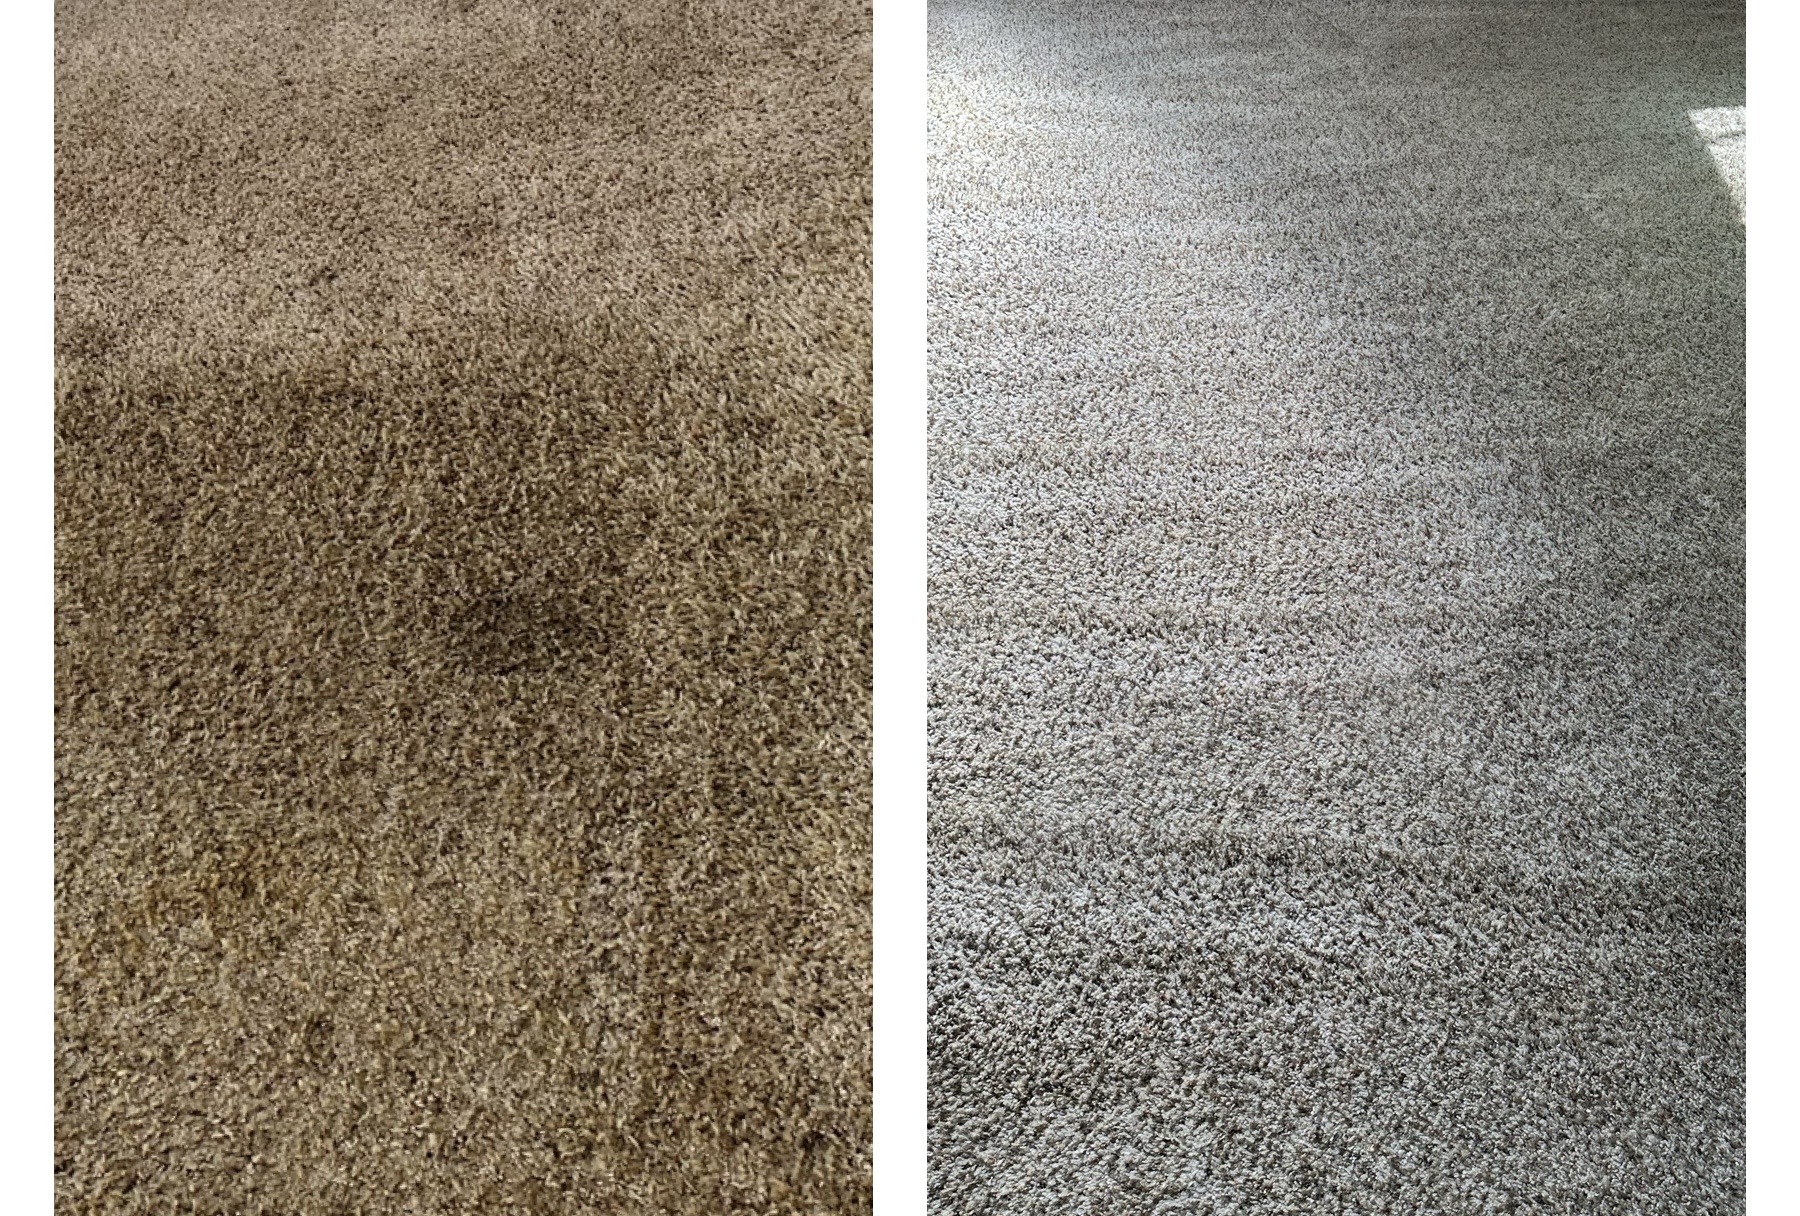 Palma Carpet Cleaning Services LLC